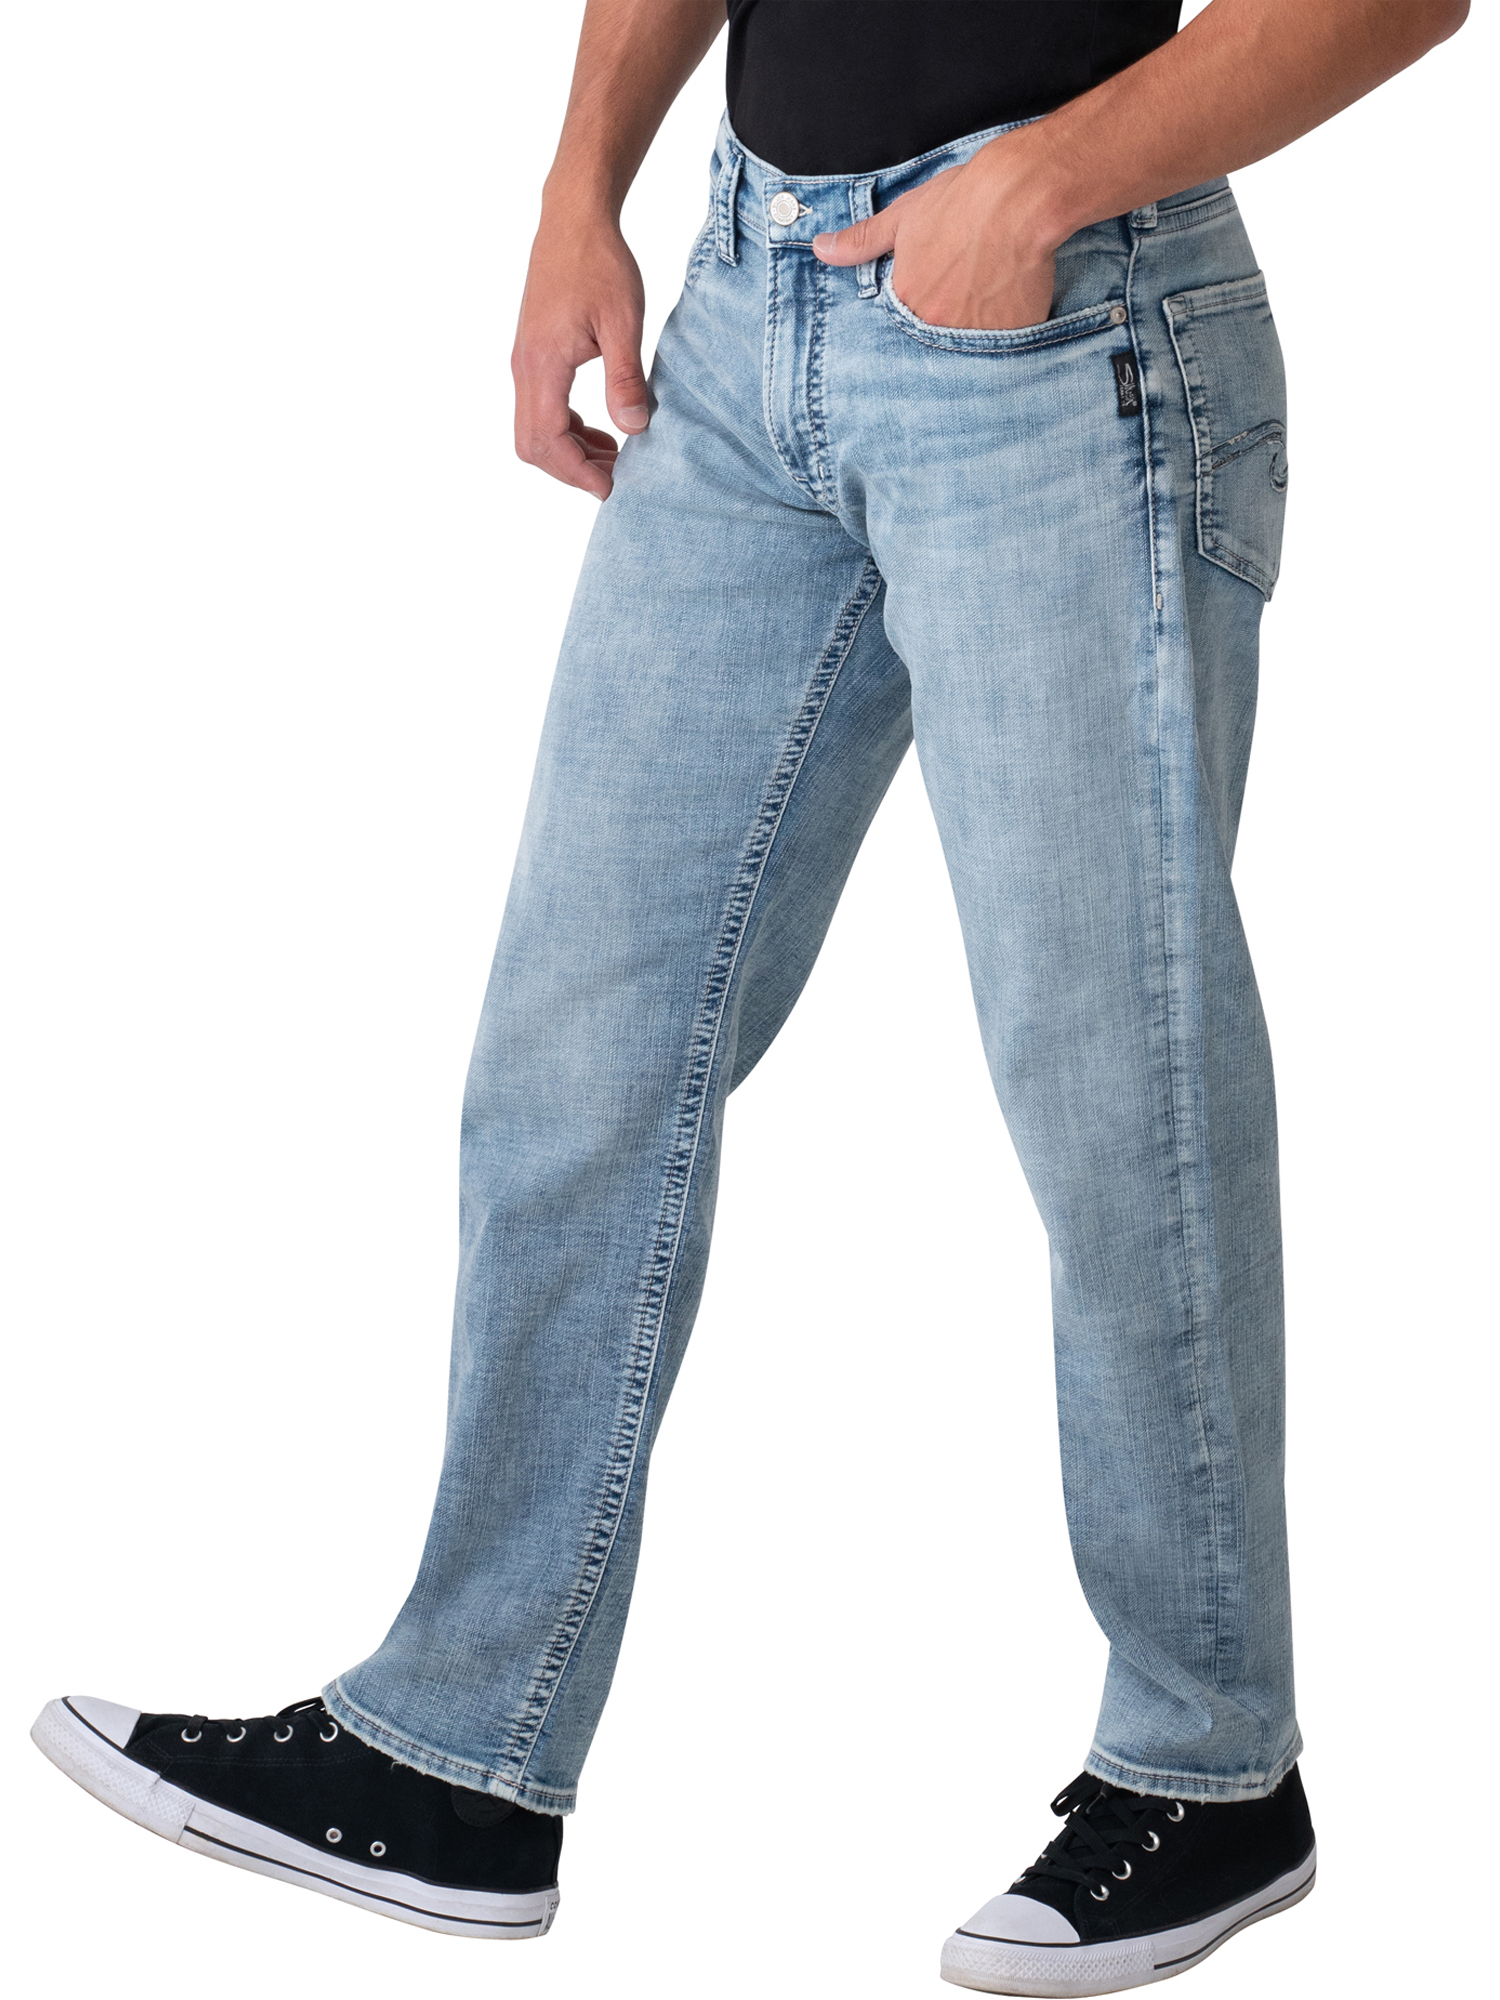 Silver Jeans Co. Men's Kenaston Slim Fit Slim Leg Jeans, Waist Sizes 28-40 - image 3 of 3